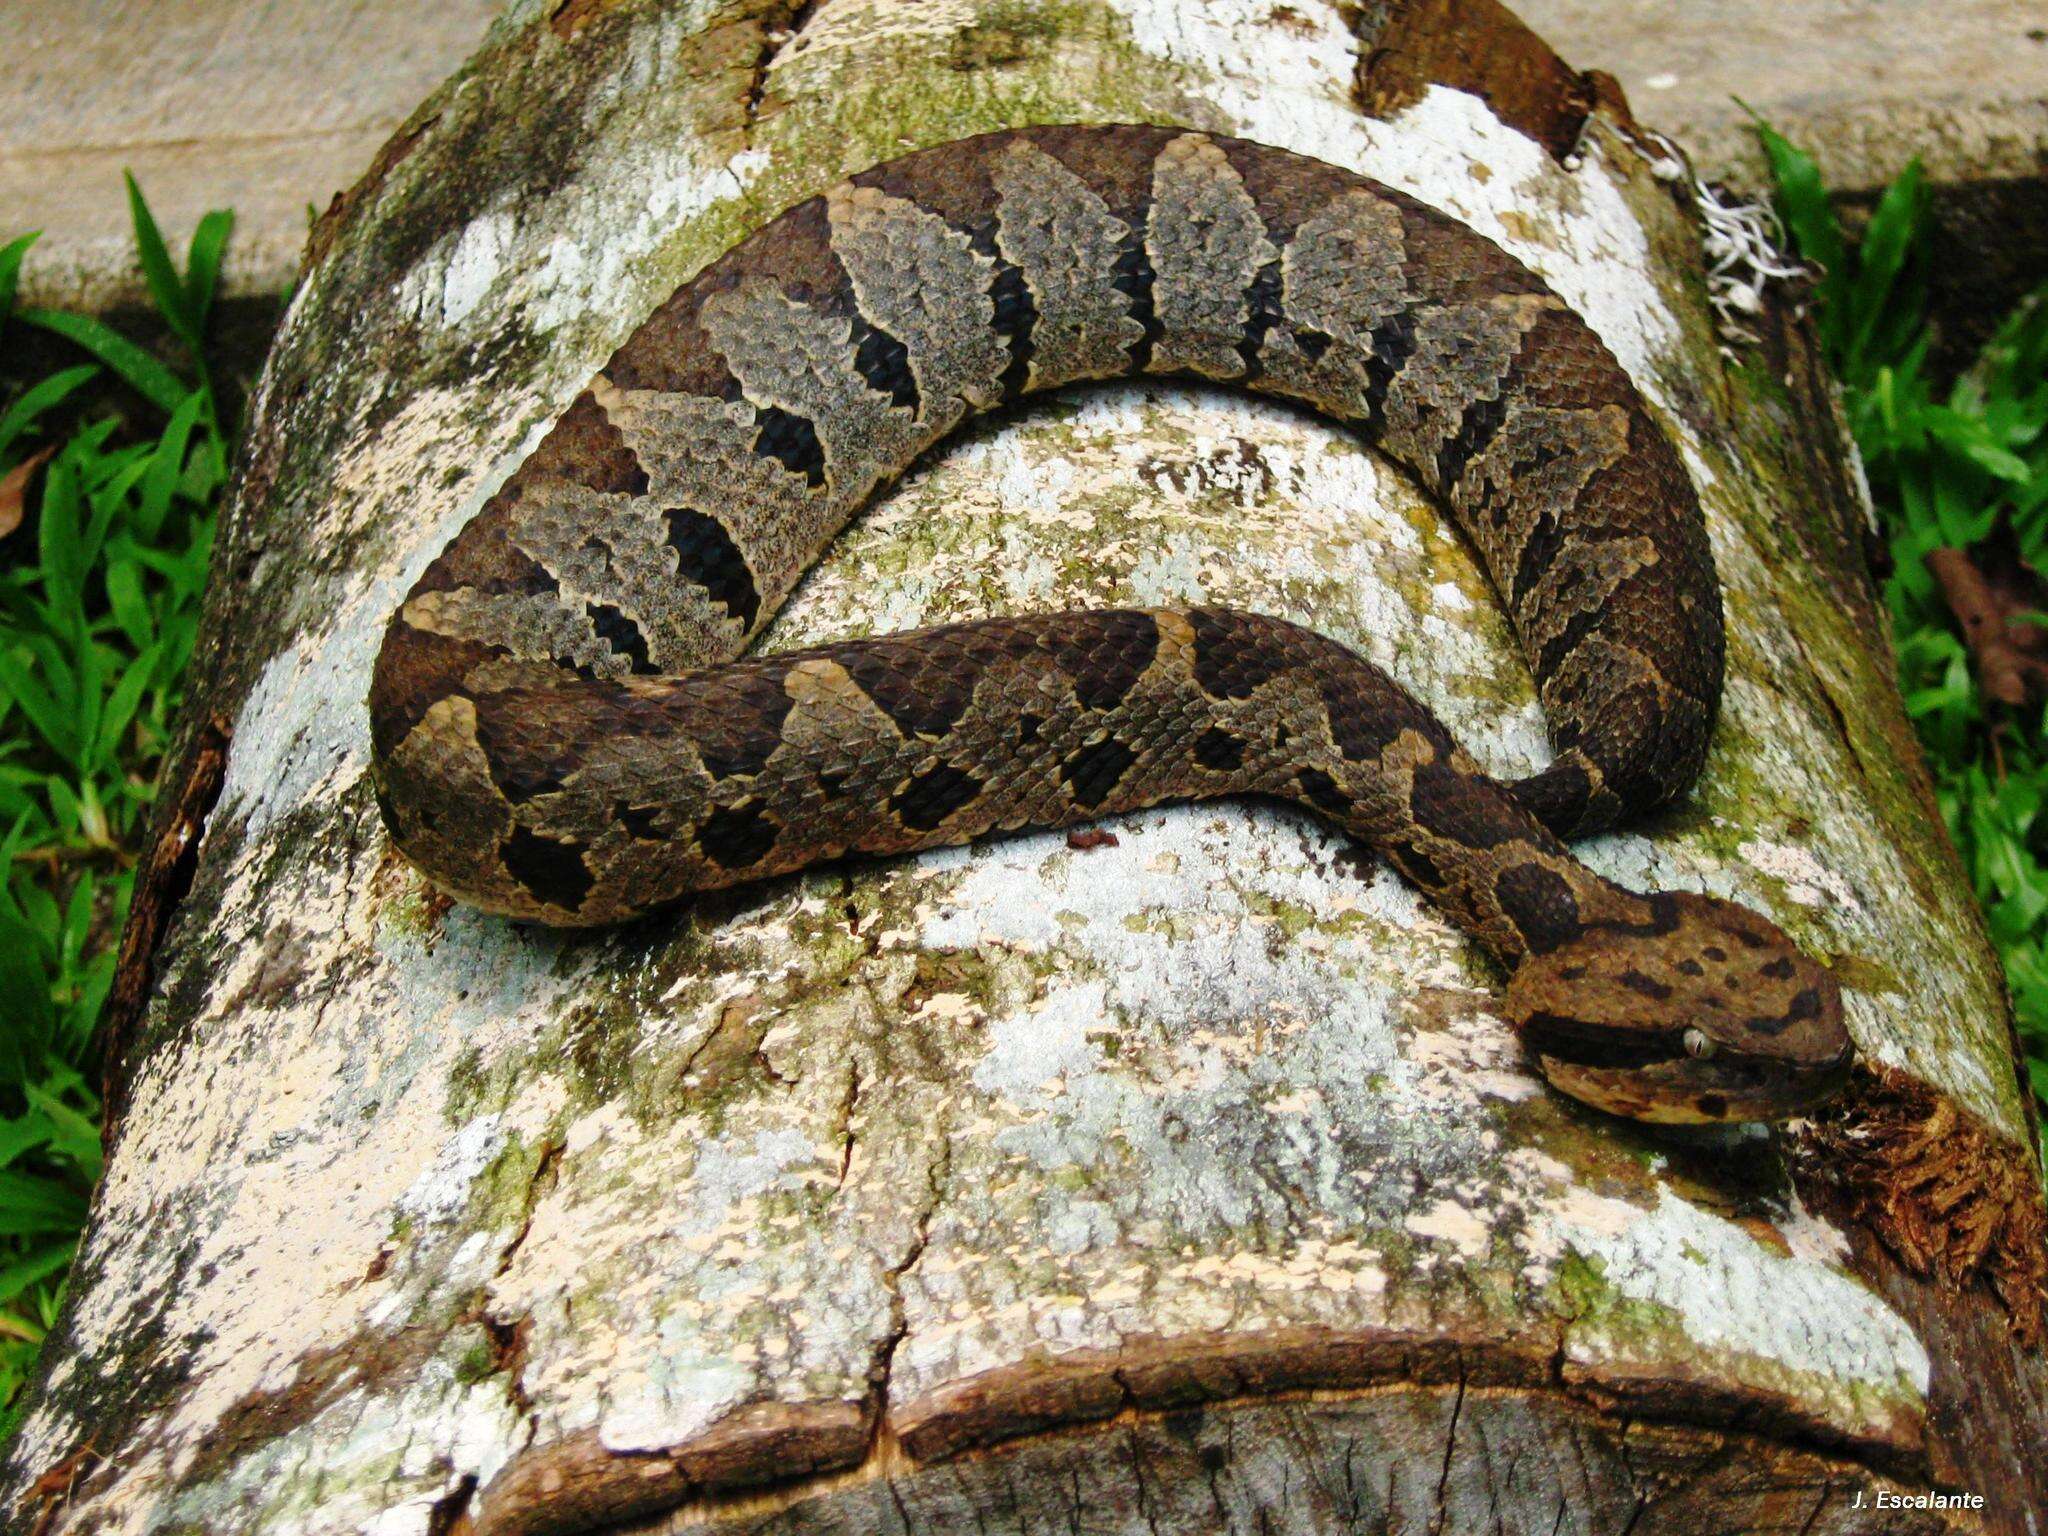 Image of Olmecan Pit Viper